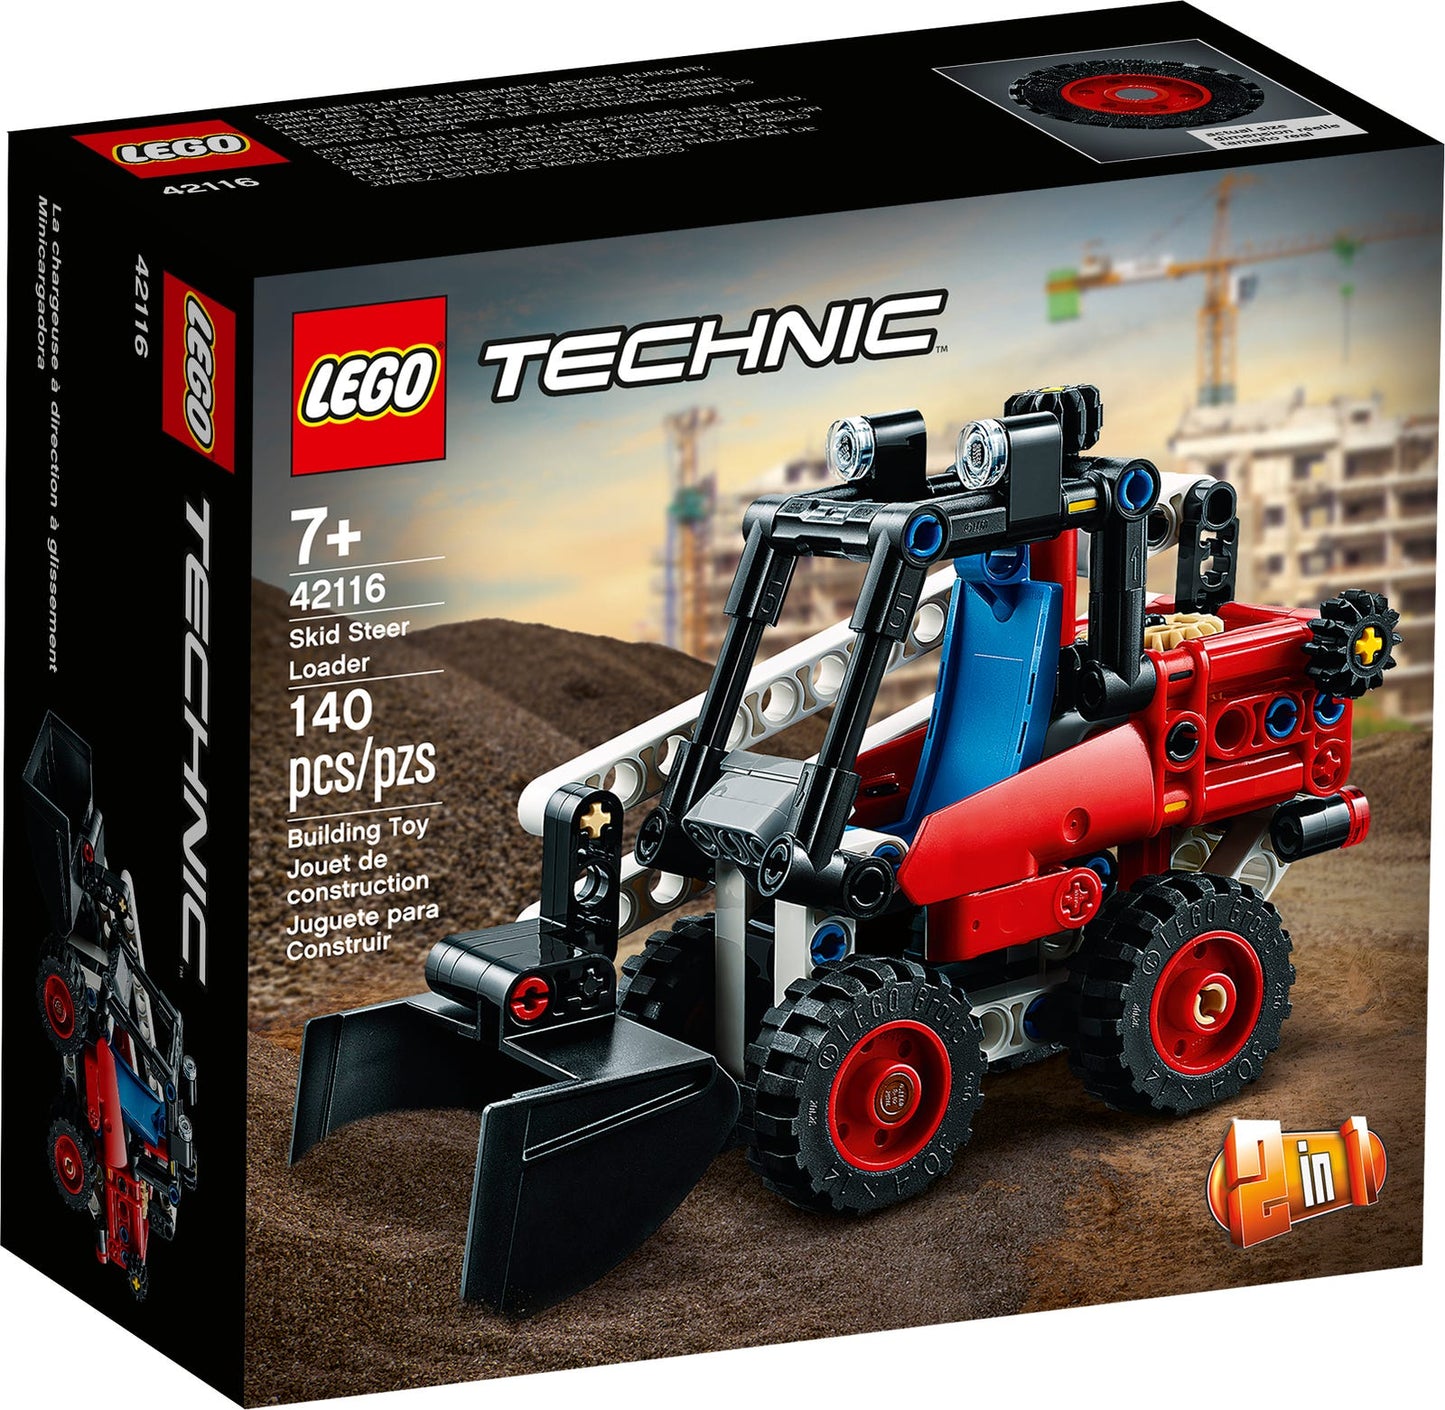 LEGO Technic Skid Steer Loader 42116